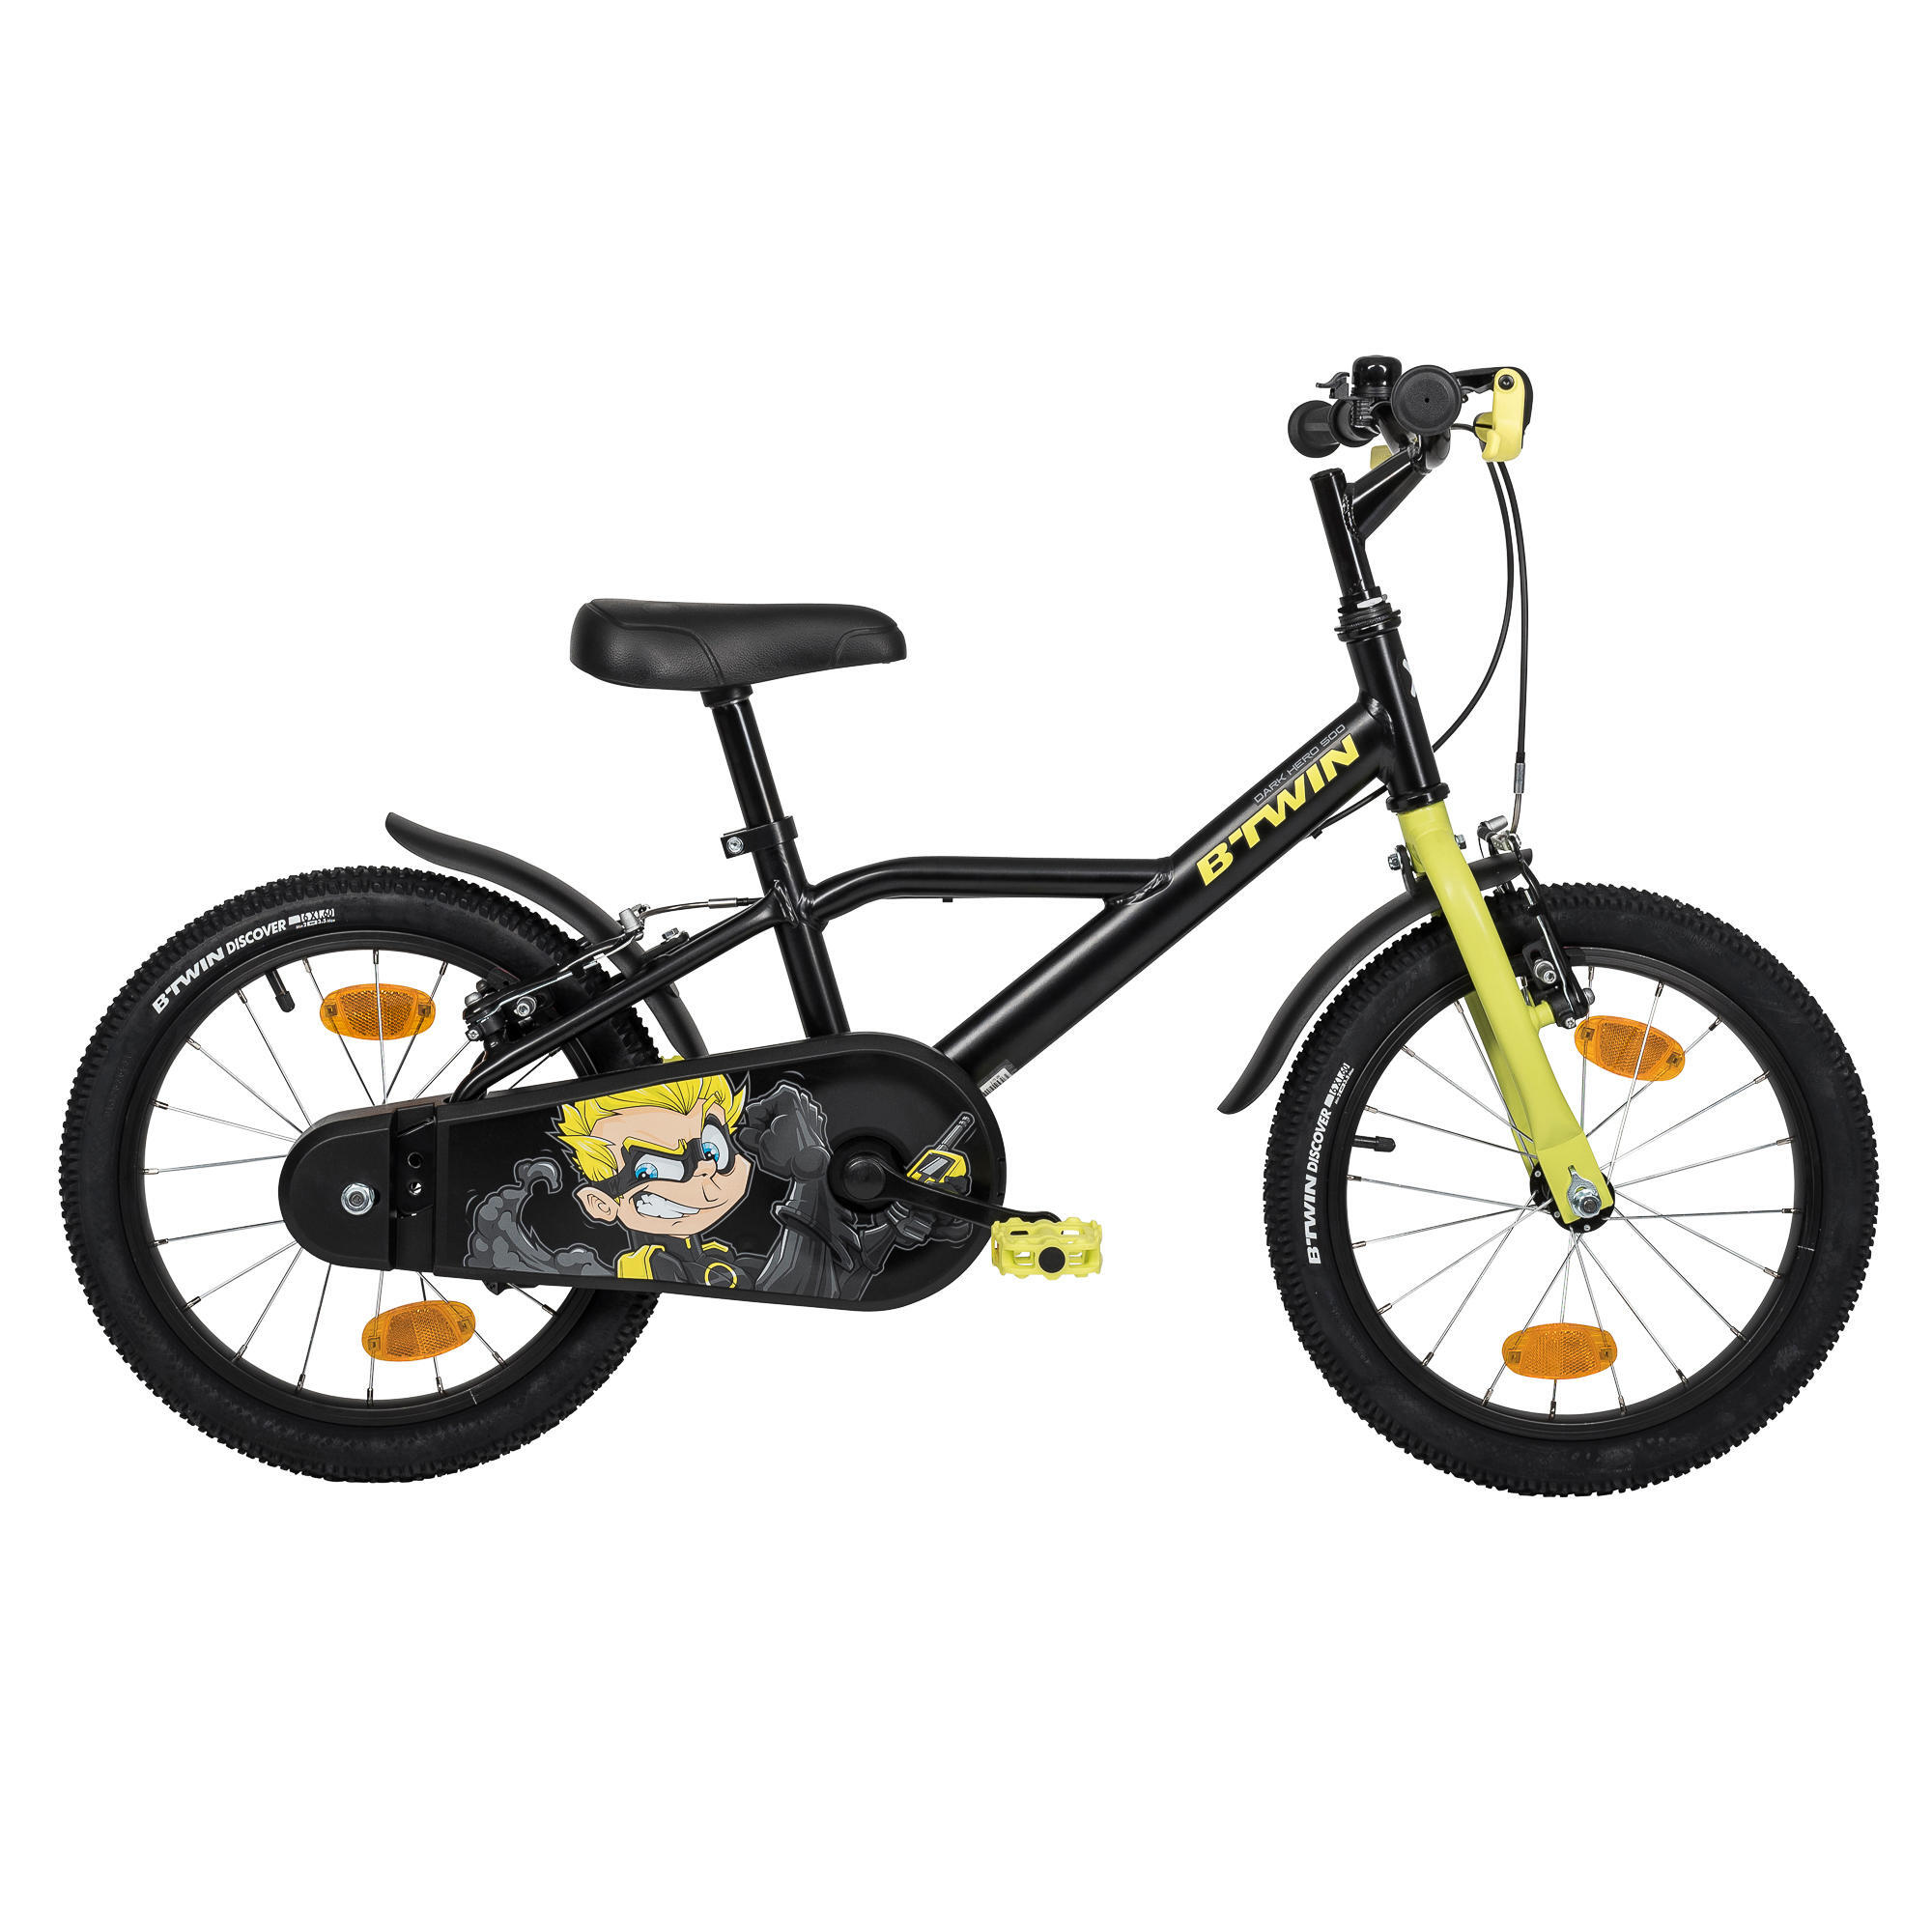 Kids' 20” Bike - ST 500 Yellow - Fluo lime yellow - Btwin - Decathlon